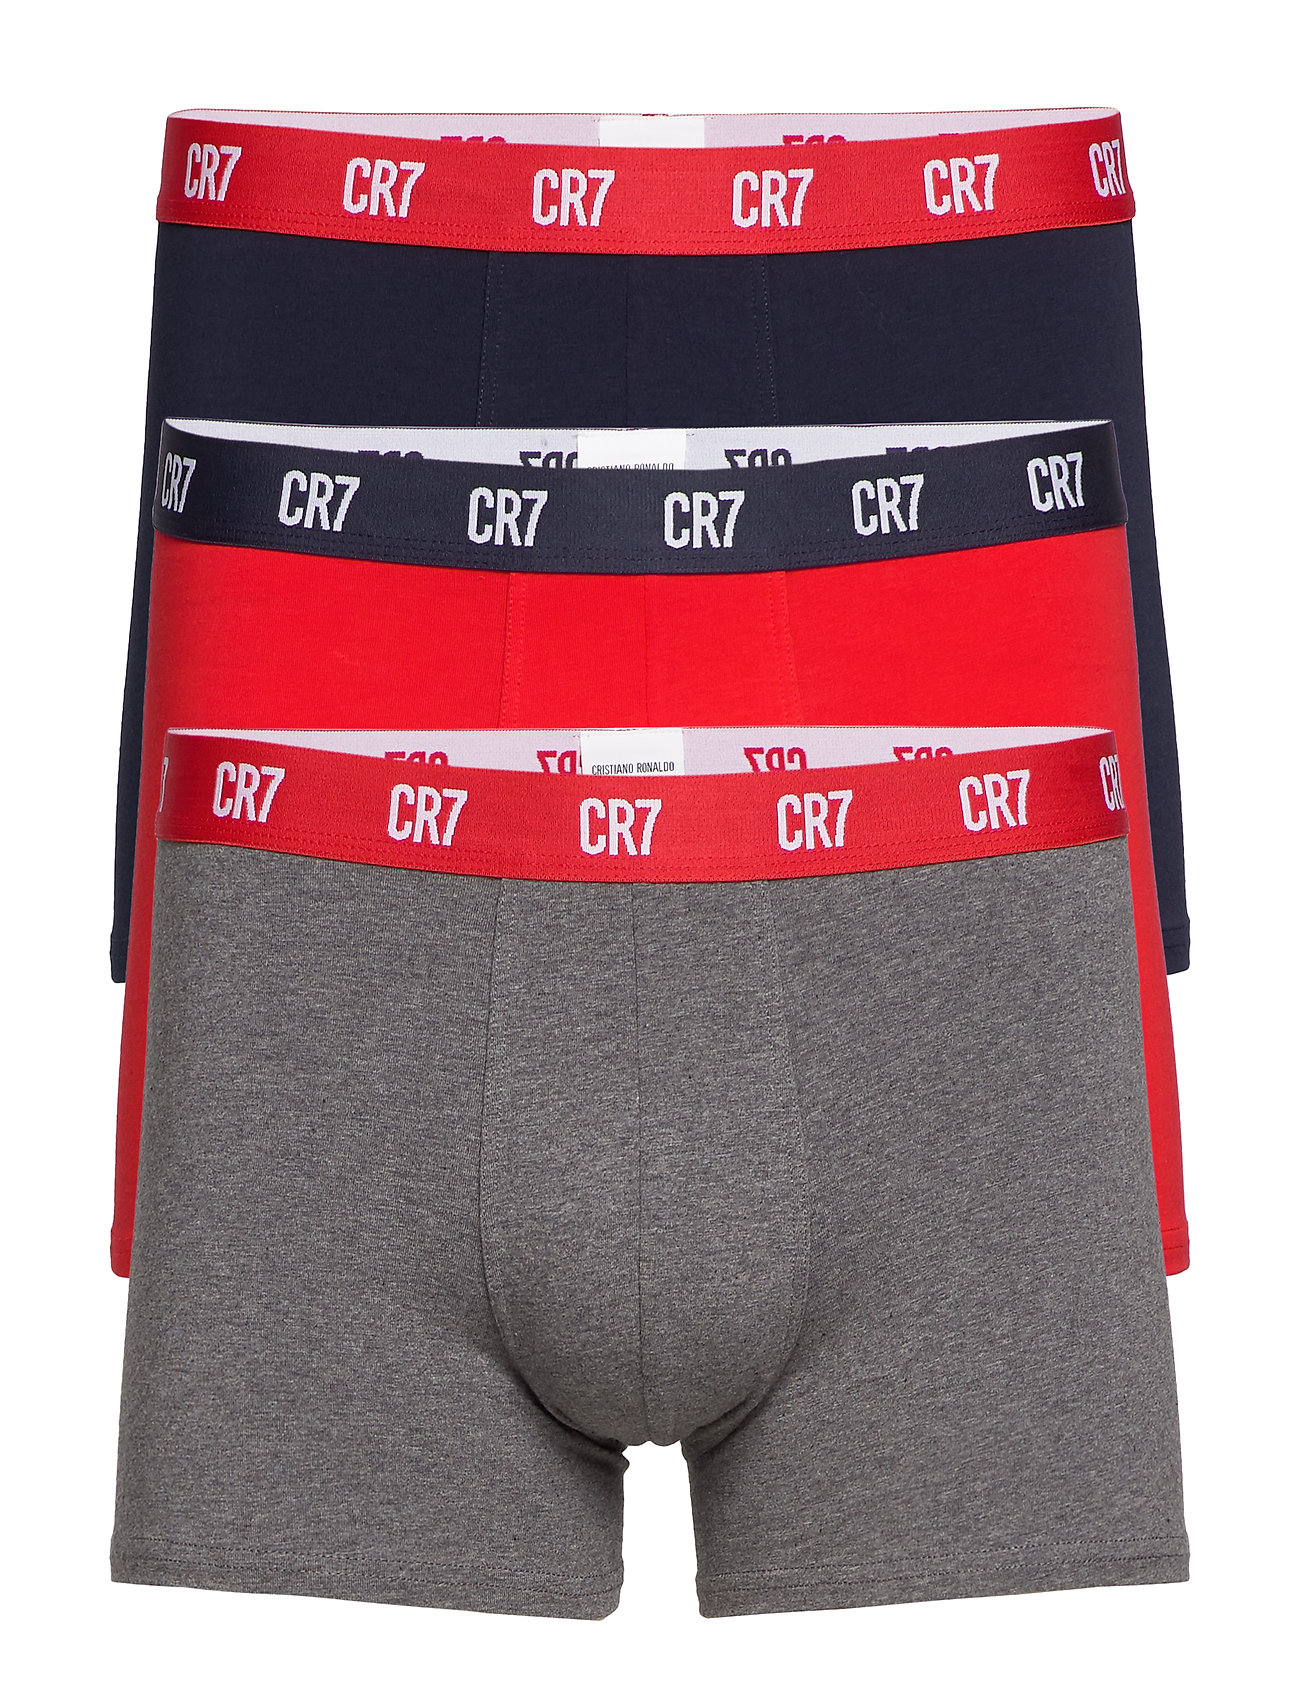 Cr7 Underwear for Men, Online Sale up to 40% off